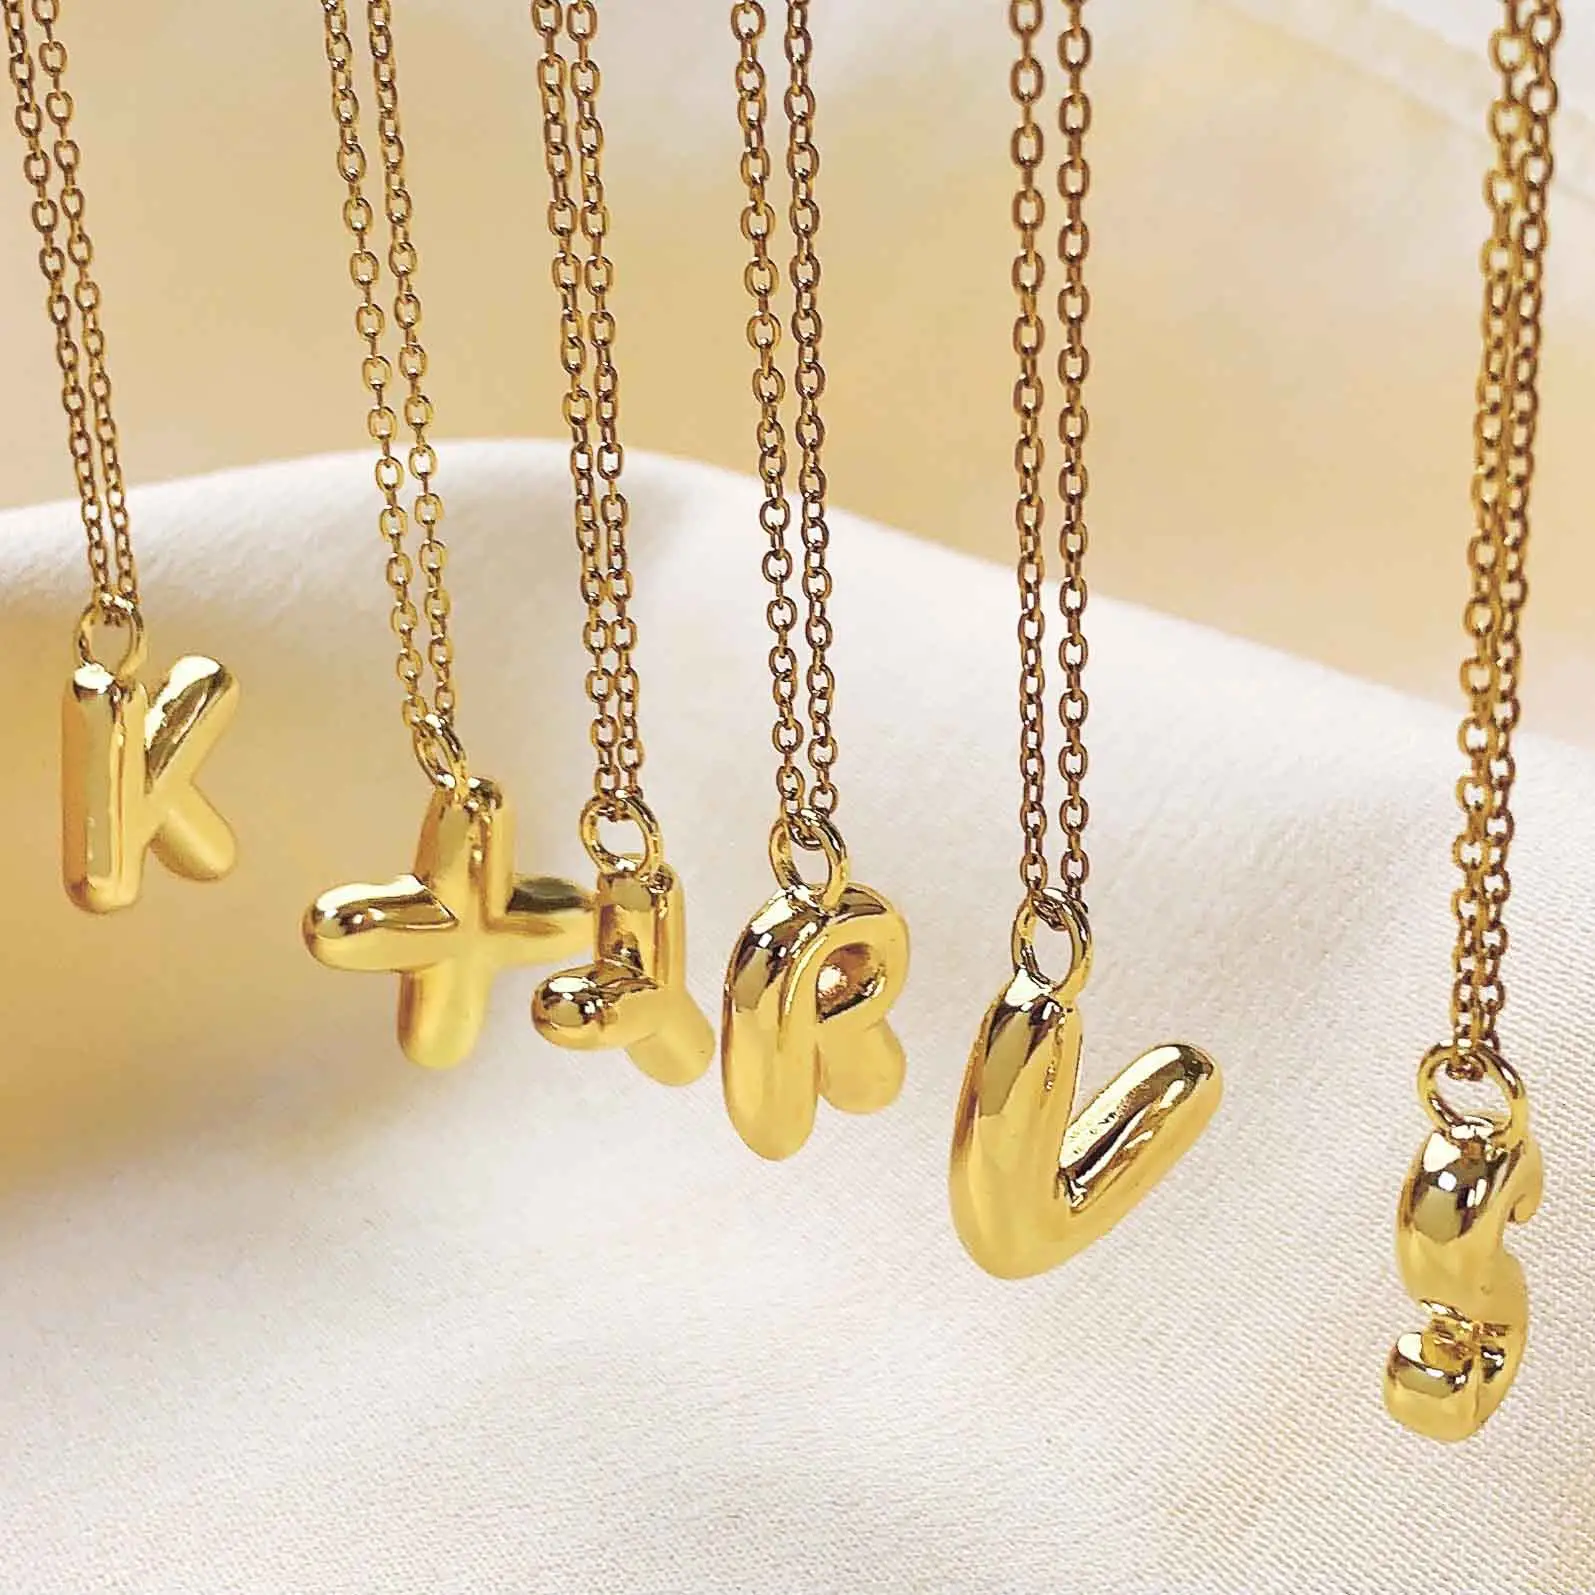 Colgante chapado en oro con letras inglesas de aleación de cobre para uso diario para mujer, collar de acero de titanio, joyería de moda